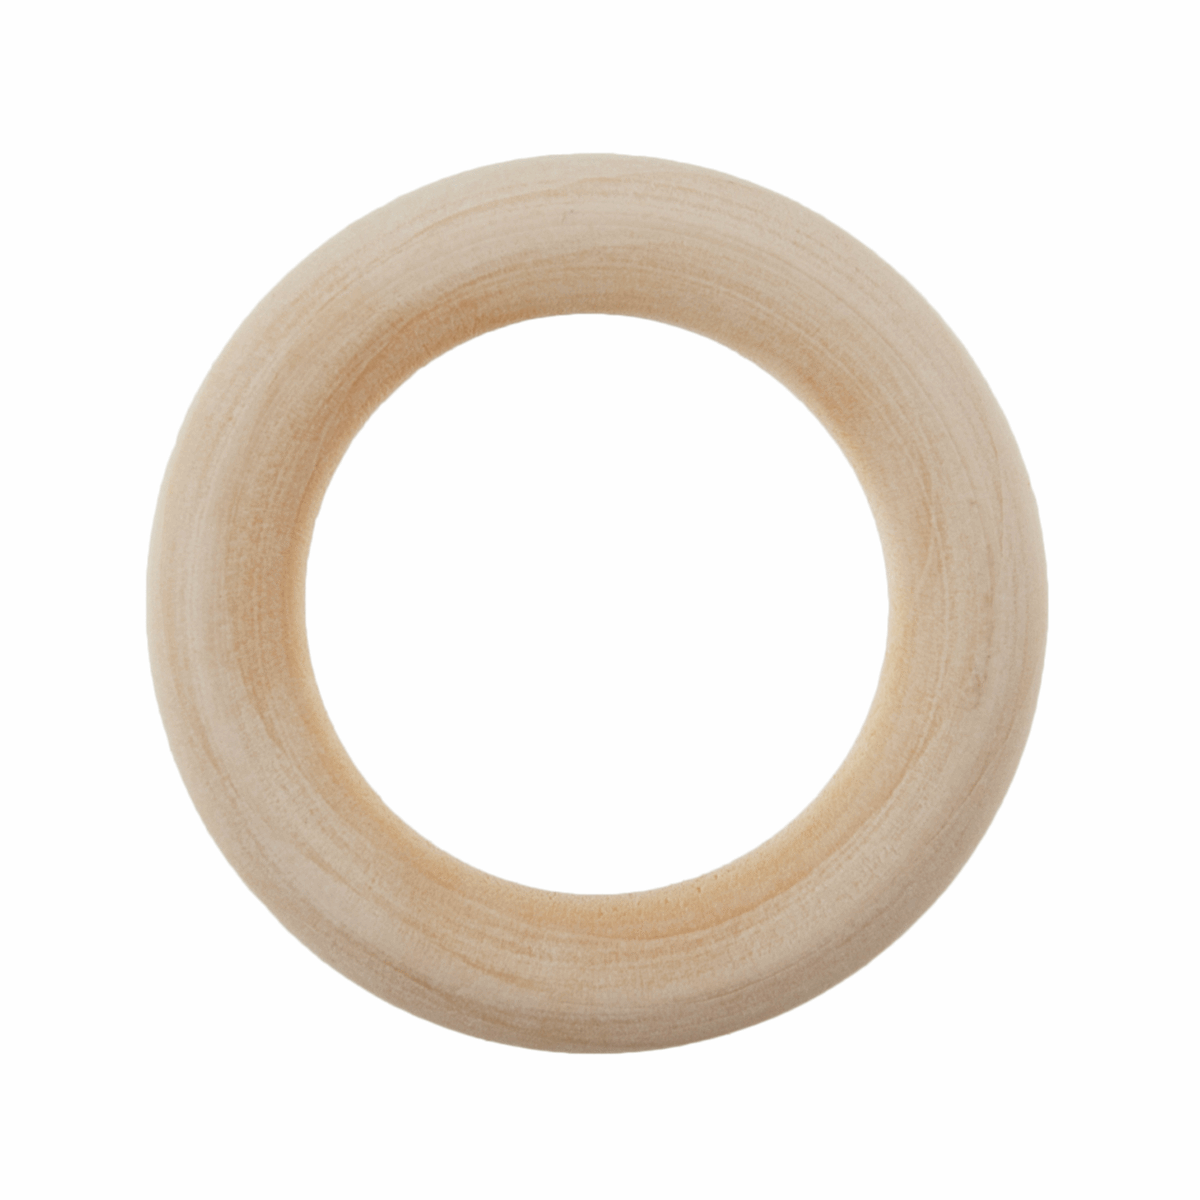 Trimits Macrame Round Wooden Craft Ring - 4.5cm Diameter